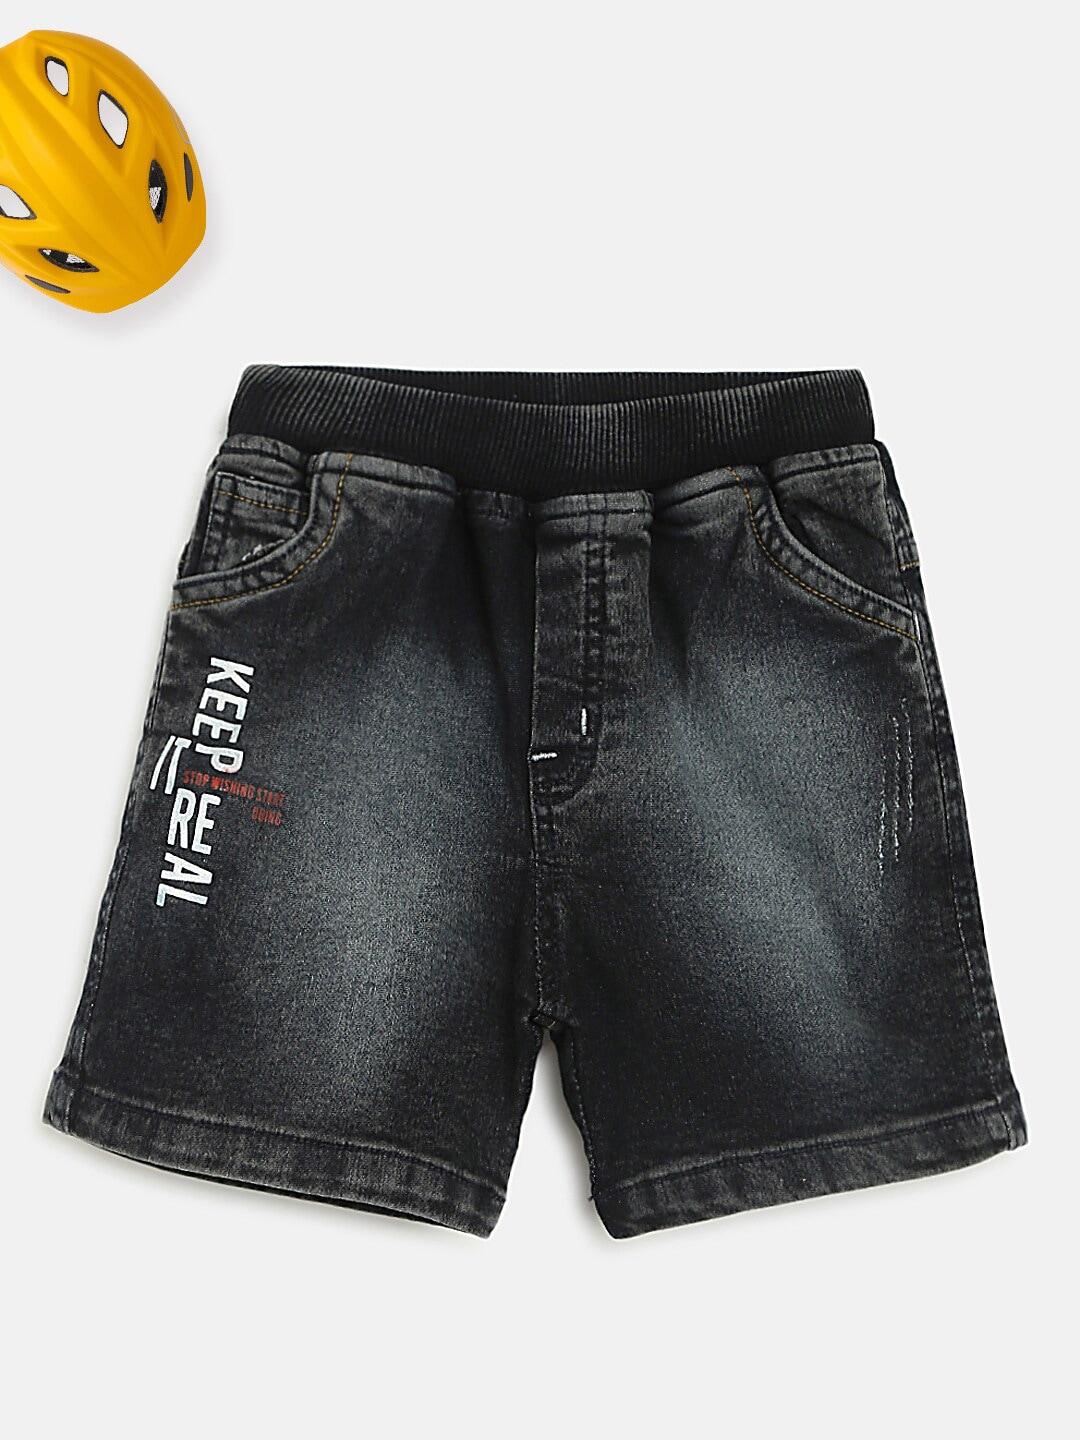 homegrown-boys-cotton-black-washed-outdoor-denim-shorts